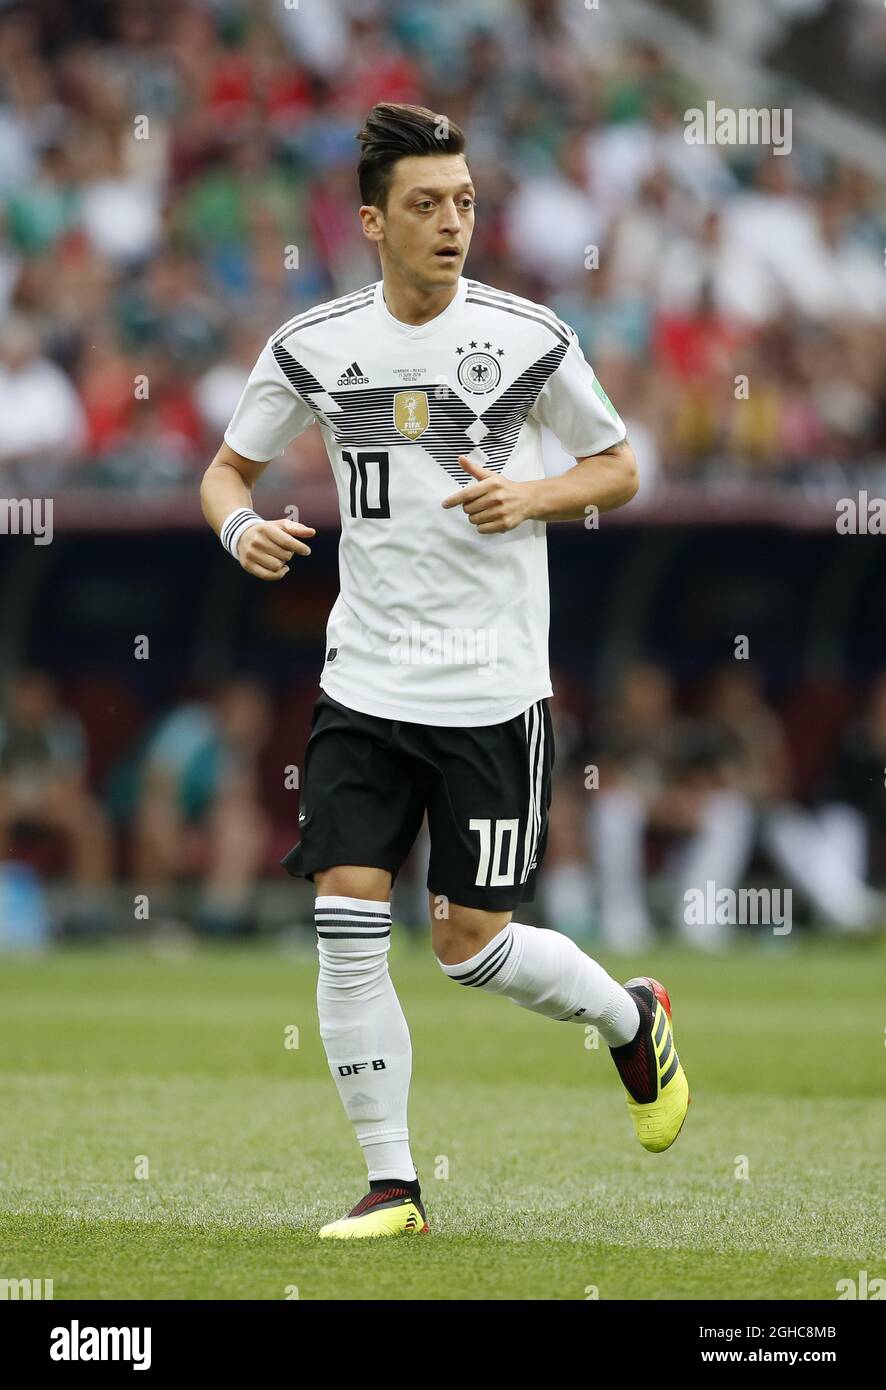 COLOURZ🇨🇦 on X: 6. Former German soccer star Mesut Ozil and